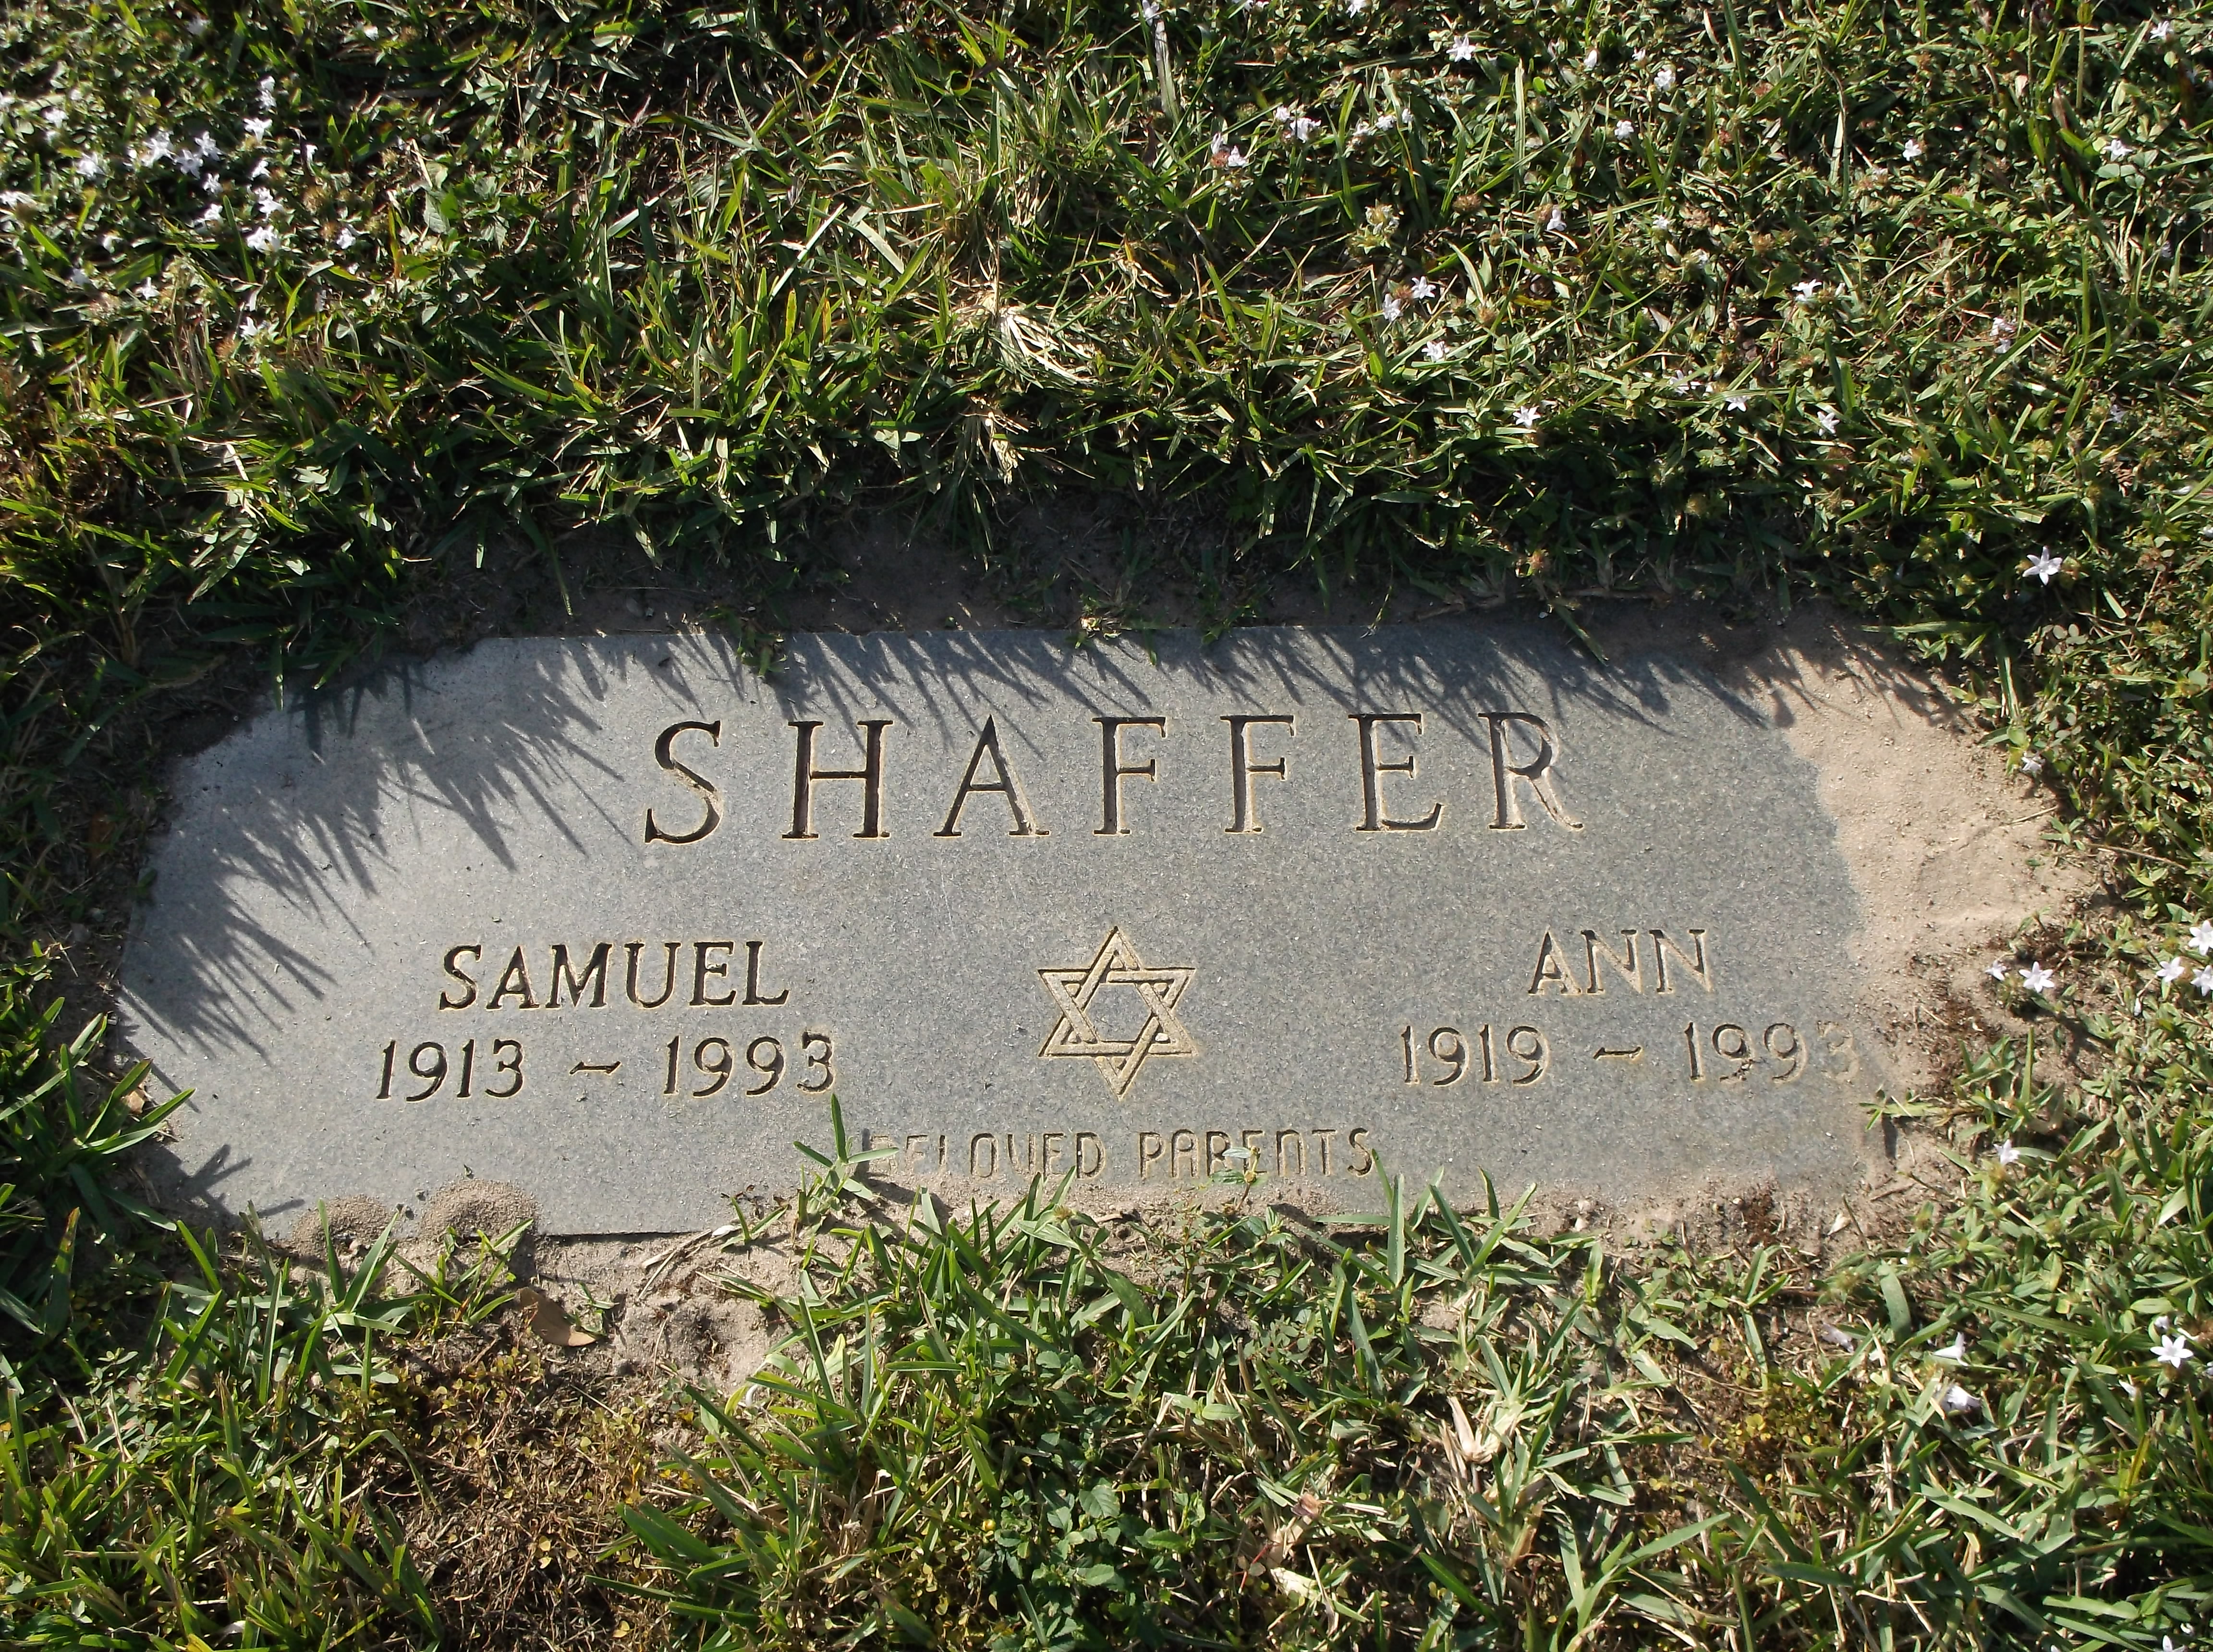 Samuel Shaffer